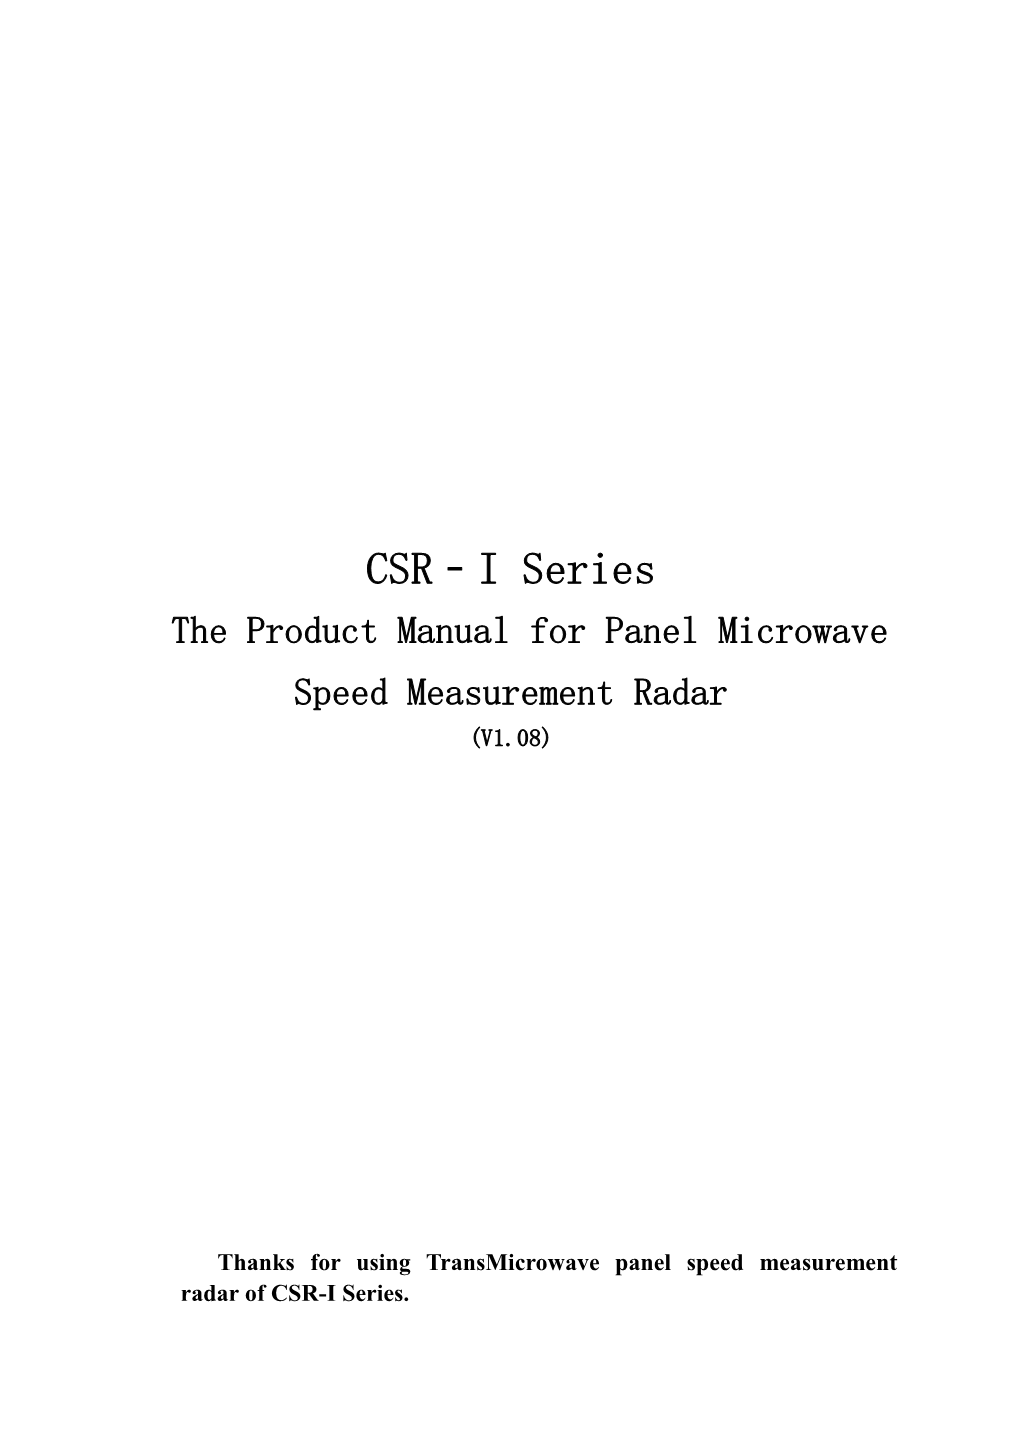 Thanks for Using Transmicrowave Panel Speed Measurement Radar of CSR-I Series